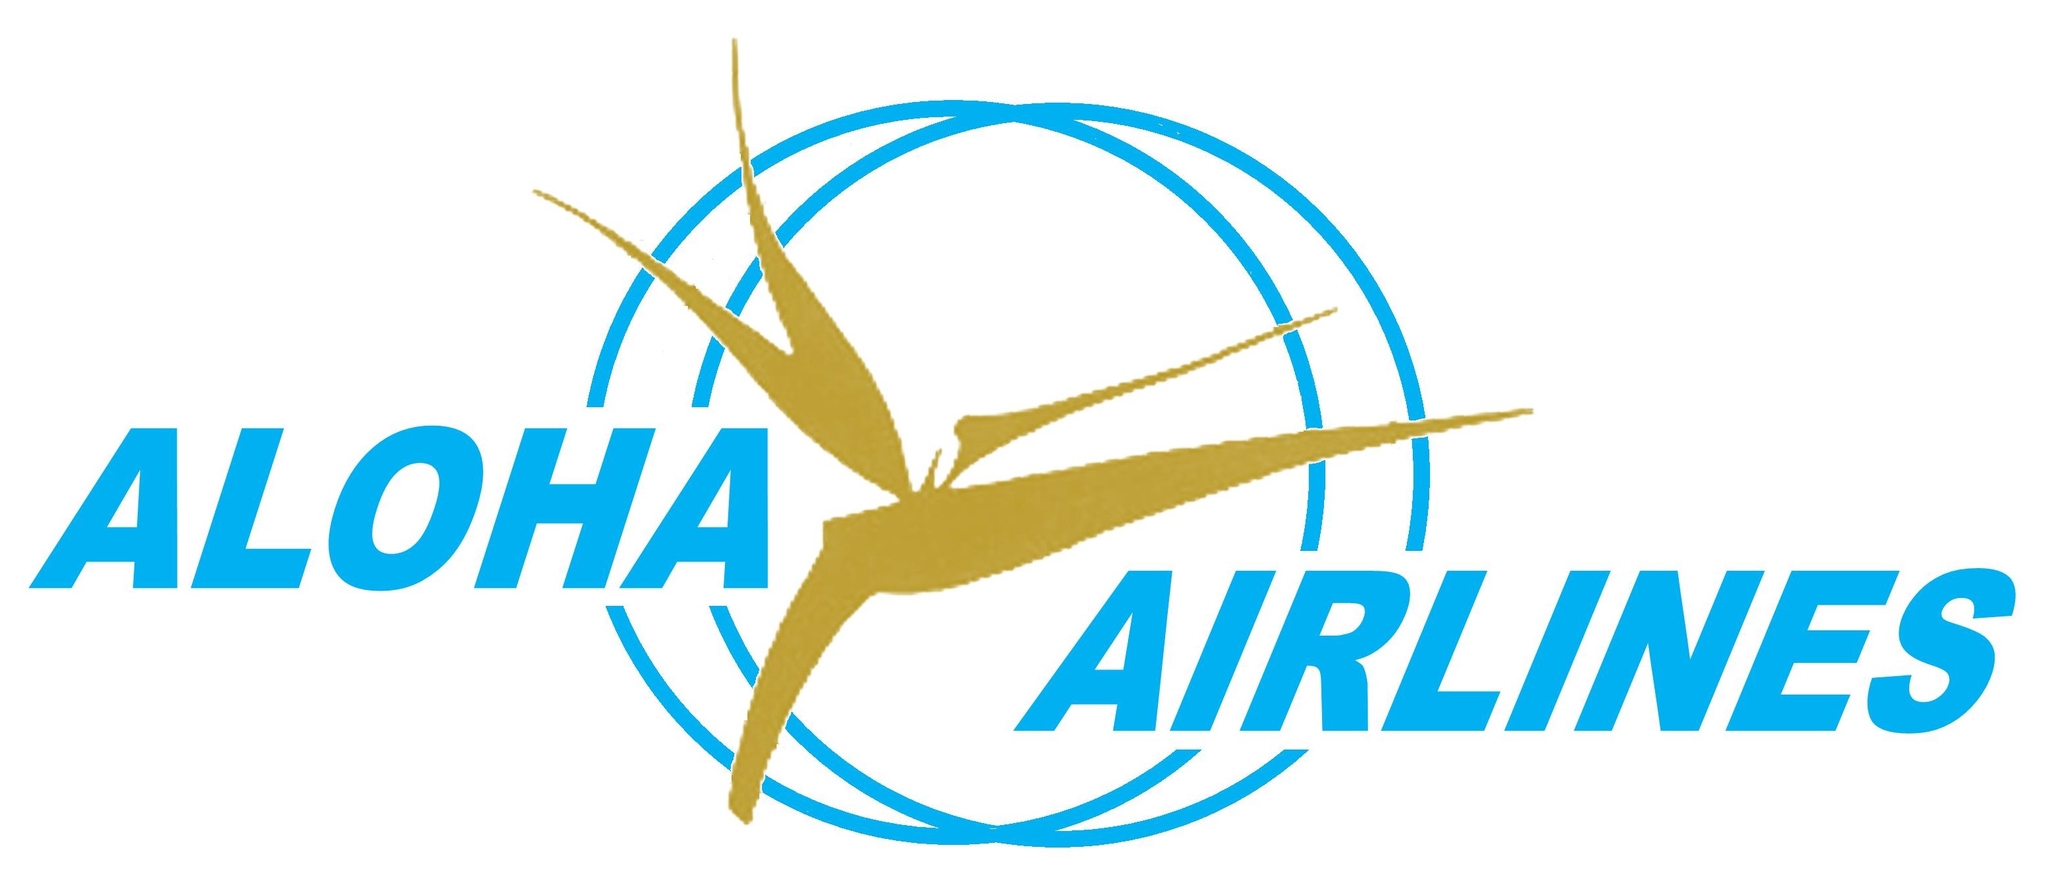 Aloha Airlines
Keywords: Aloha Airlines